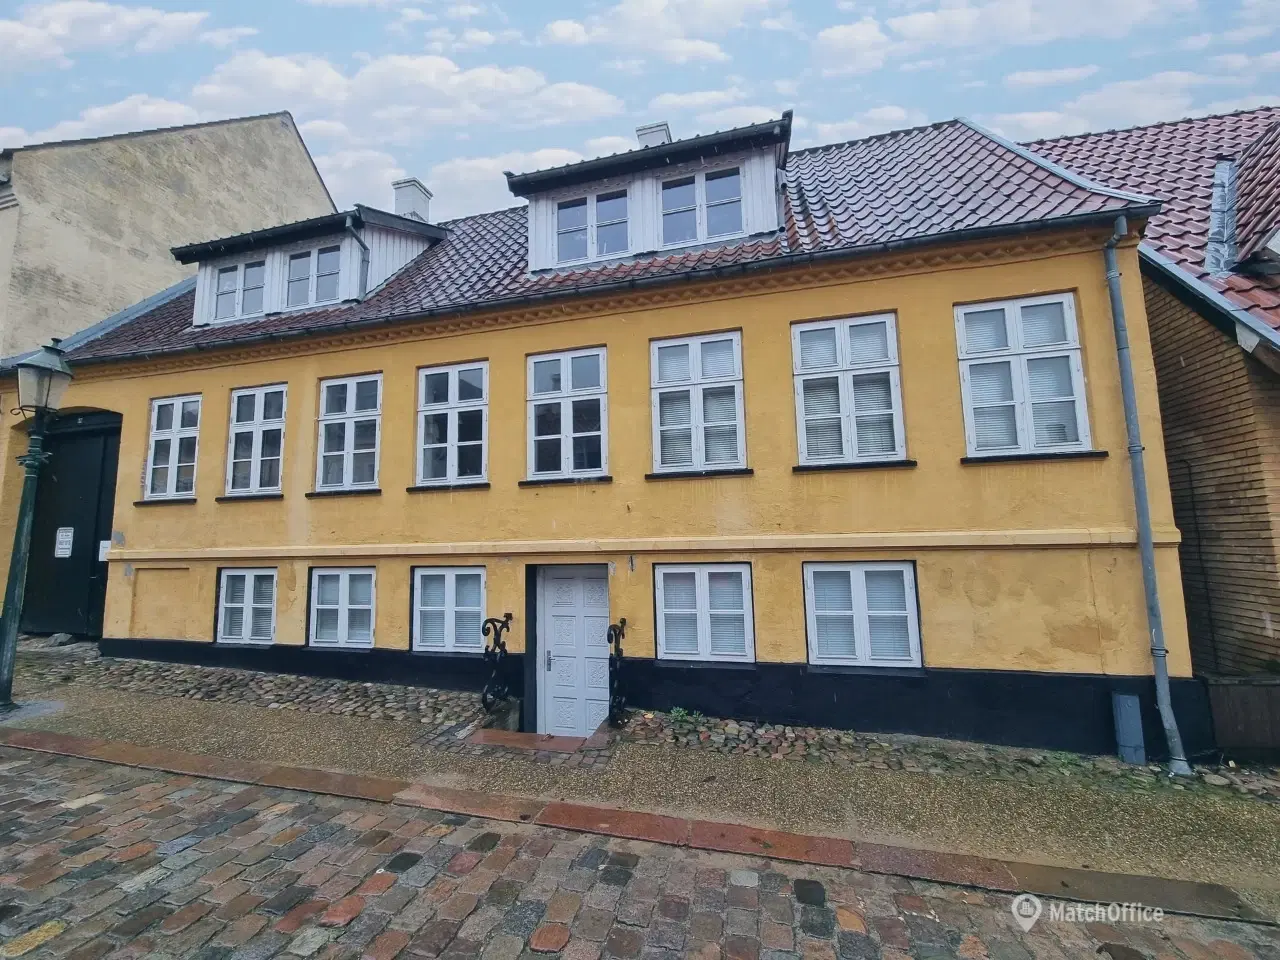 Billede 1 - Kinik / kontor i Viborg centrum - i alt ca. 60 kvm